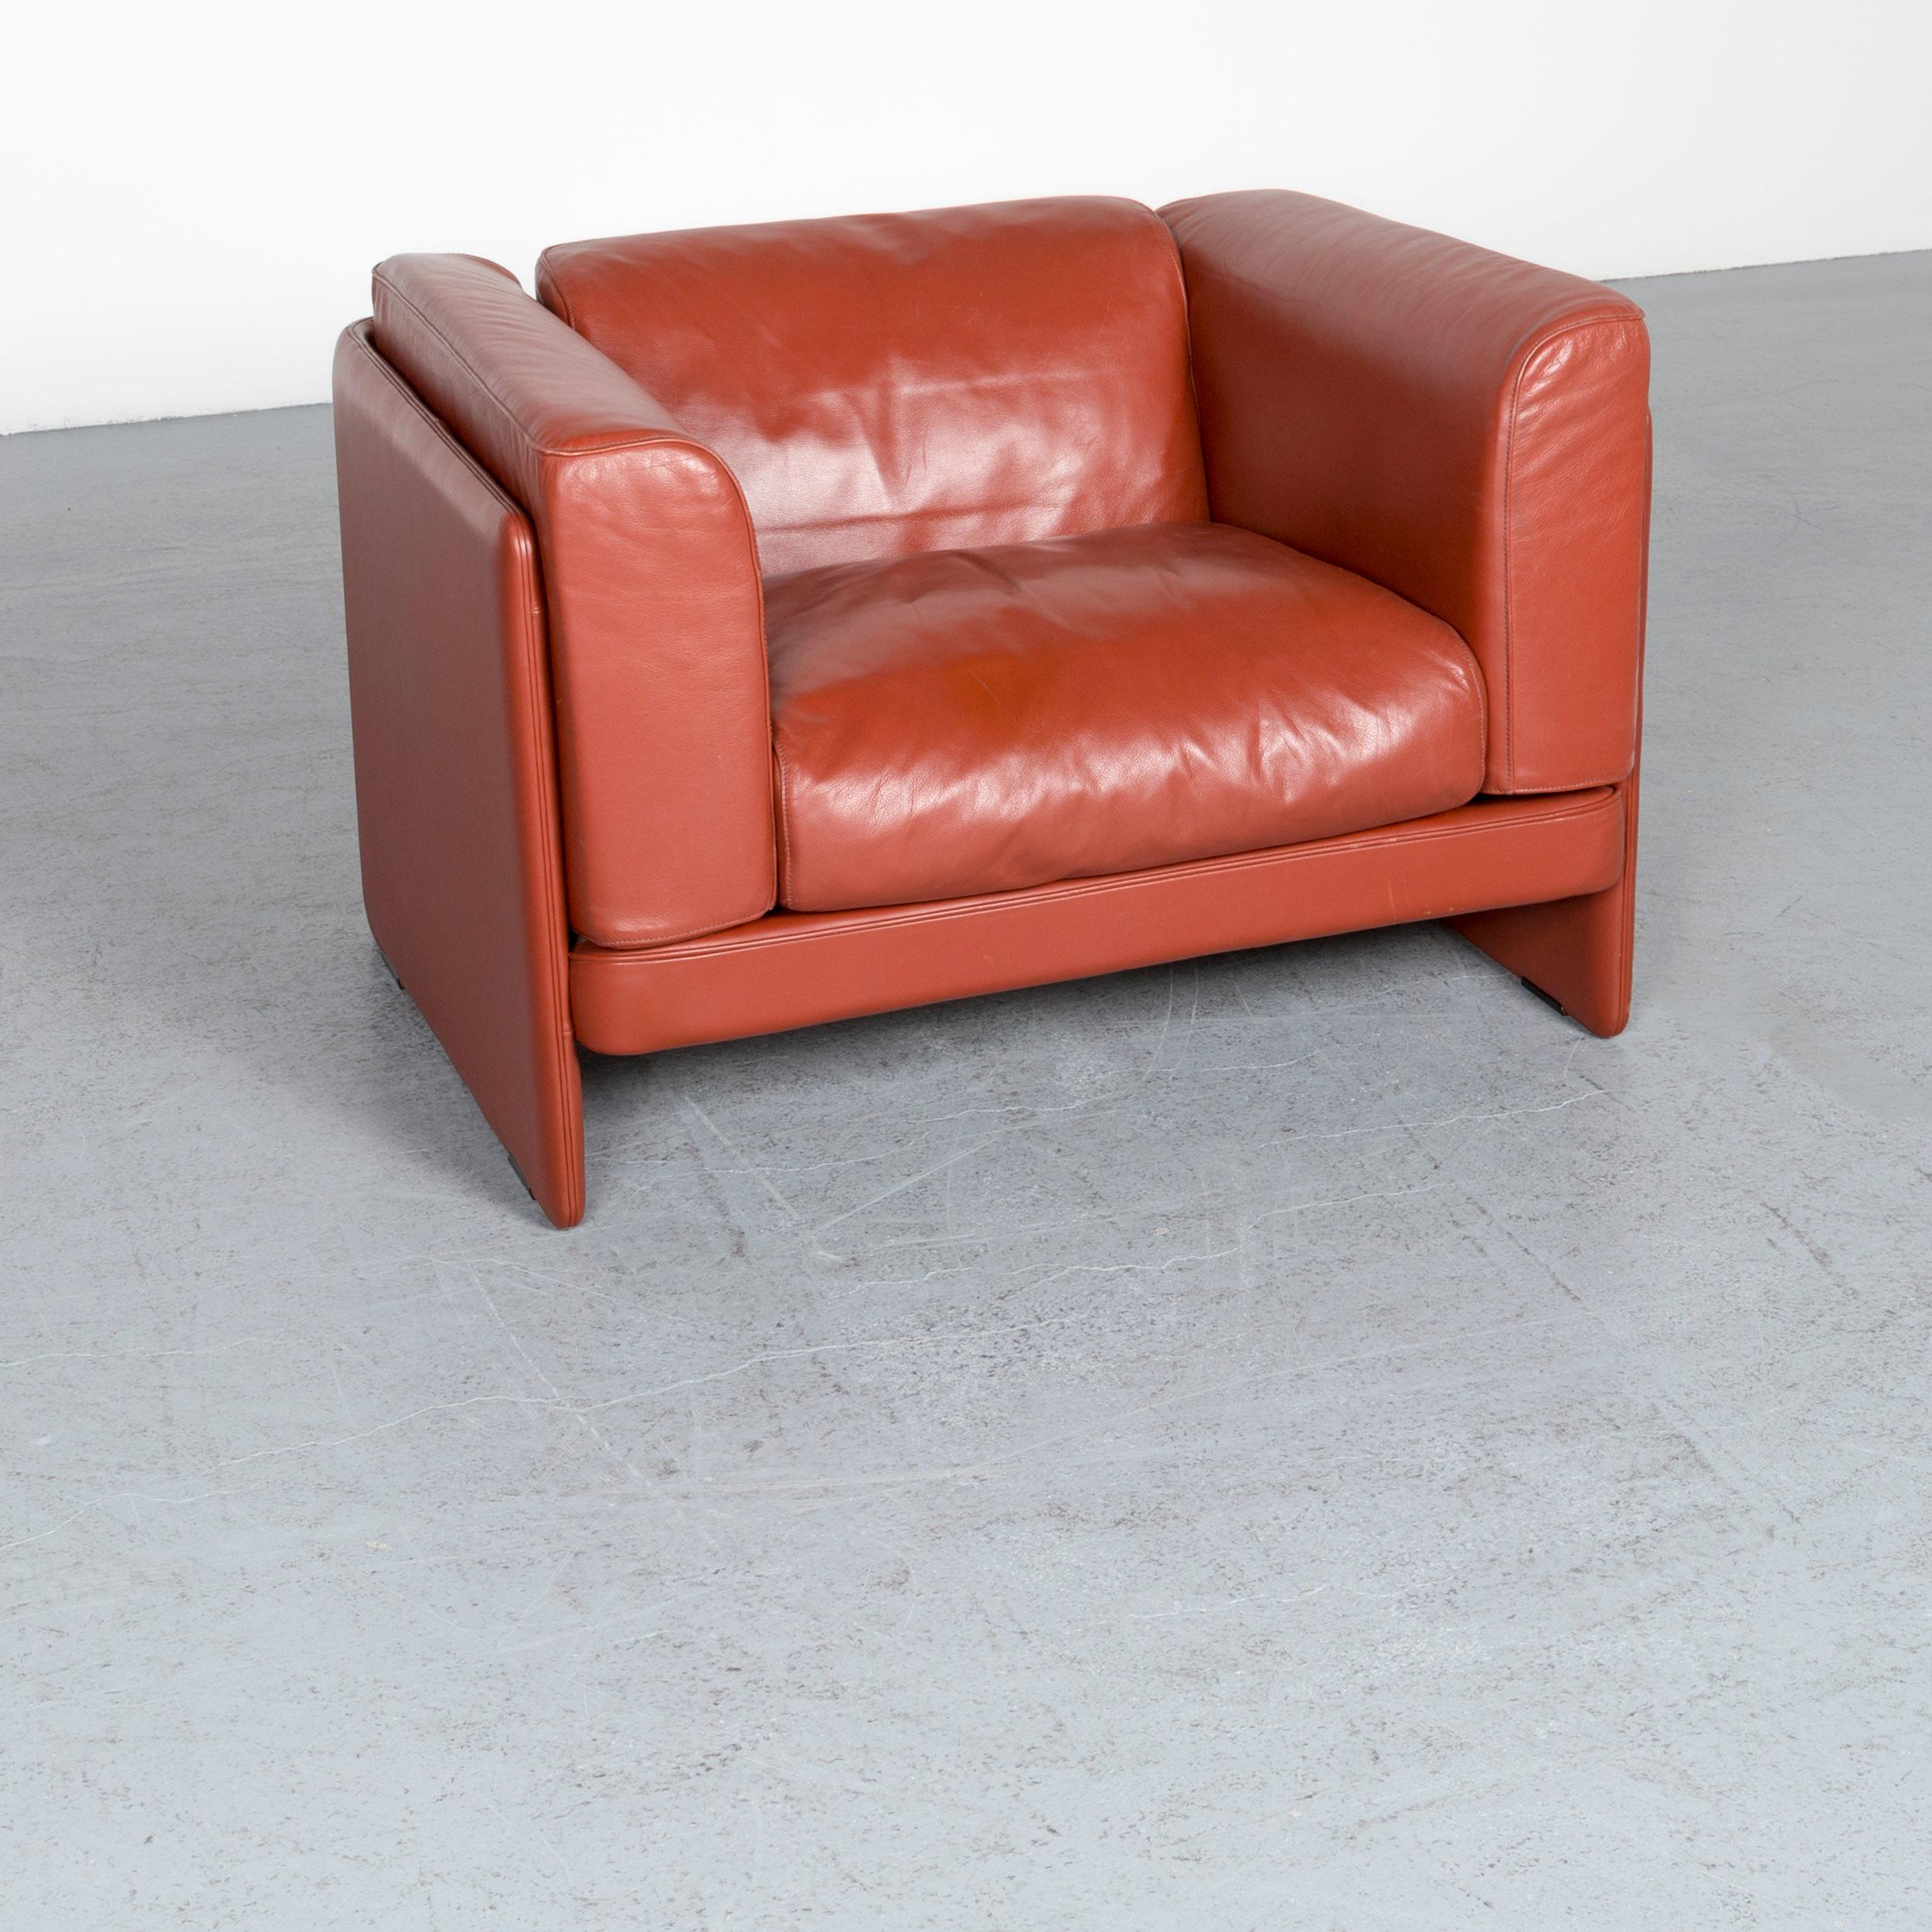 We bring to you a Poltrona Frau Le Chapanelle designer leather armchair orange by Tito Agnoli.